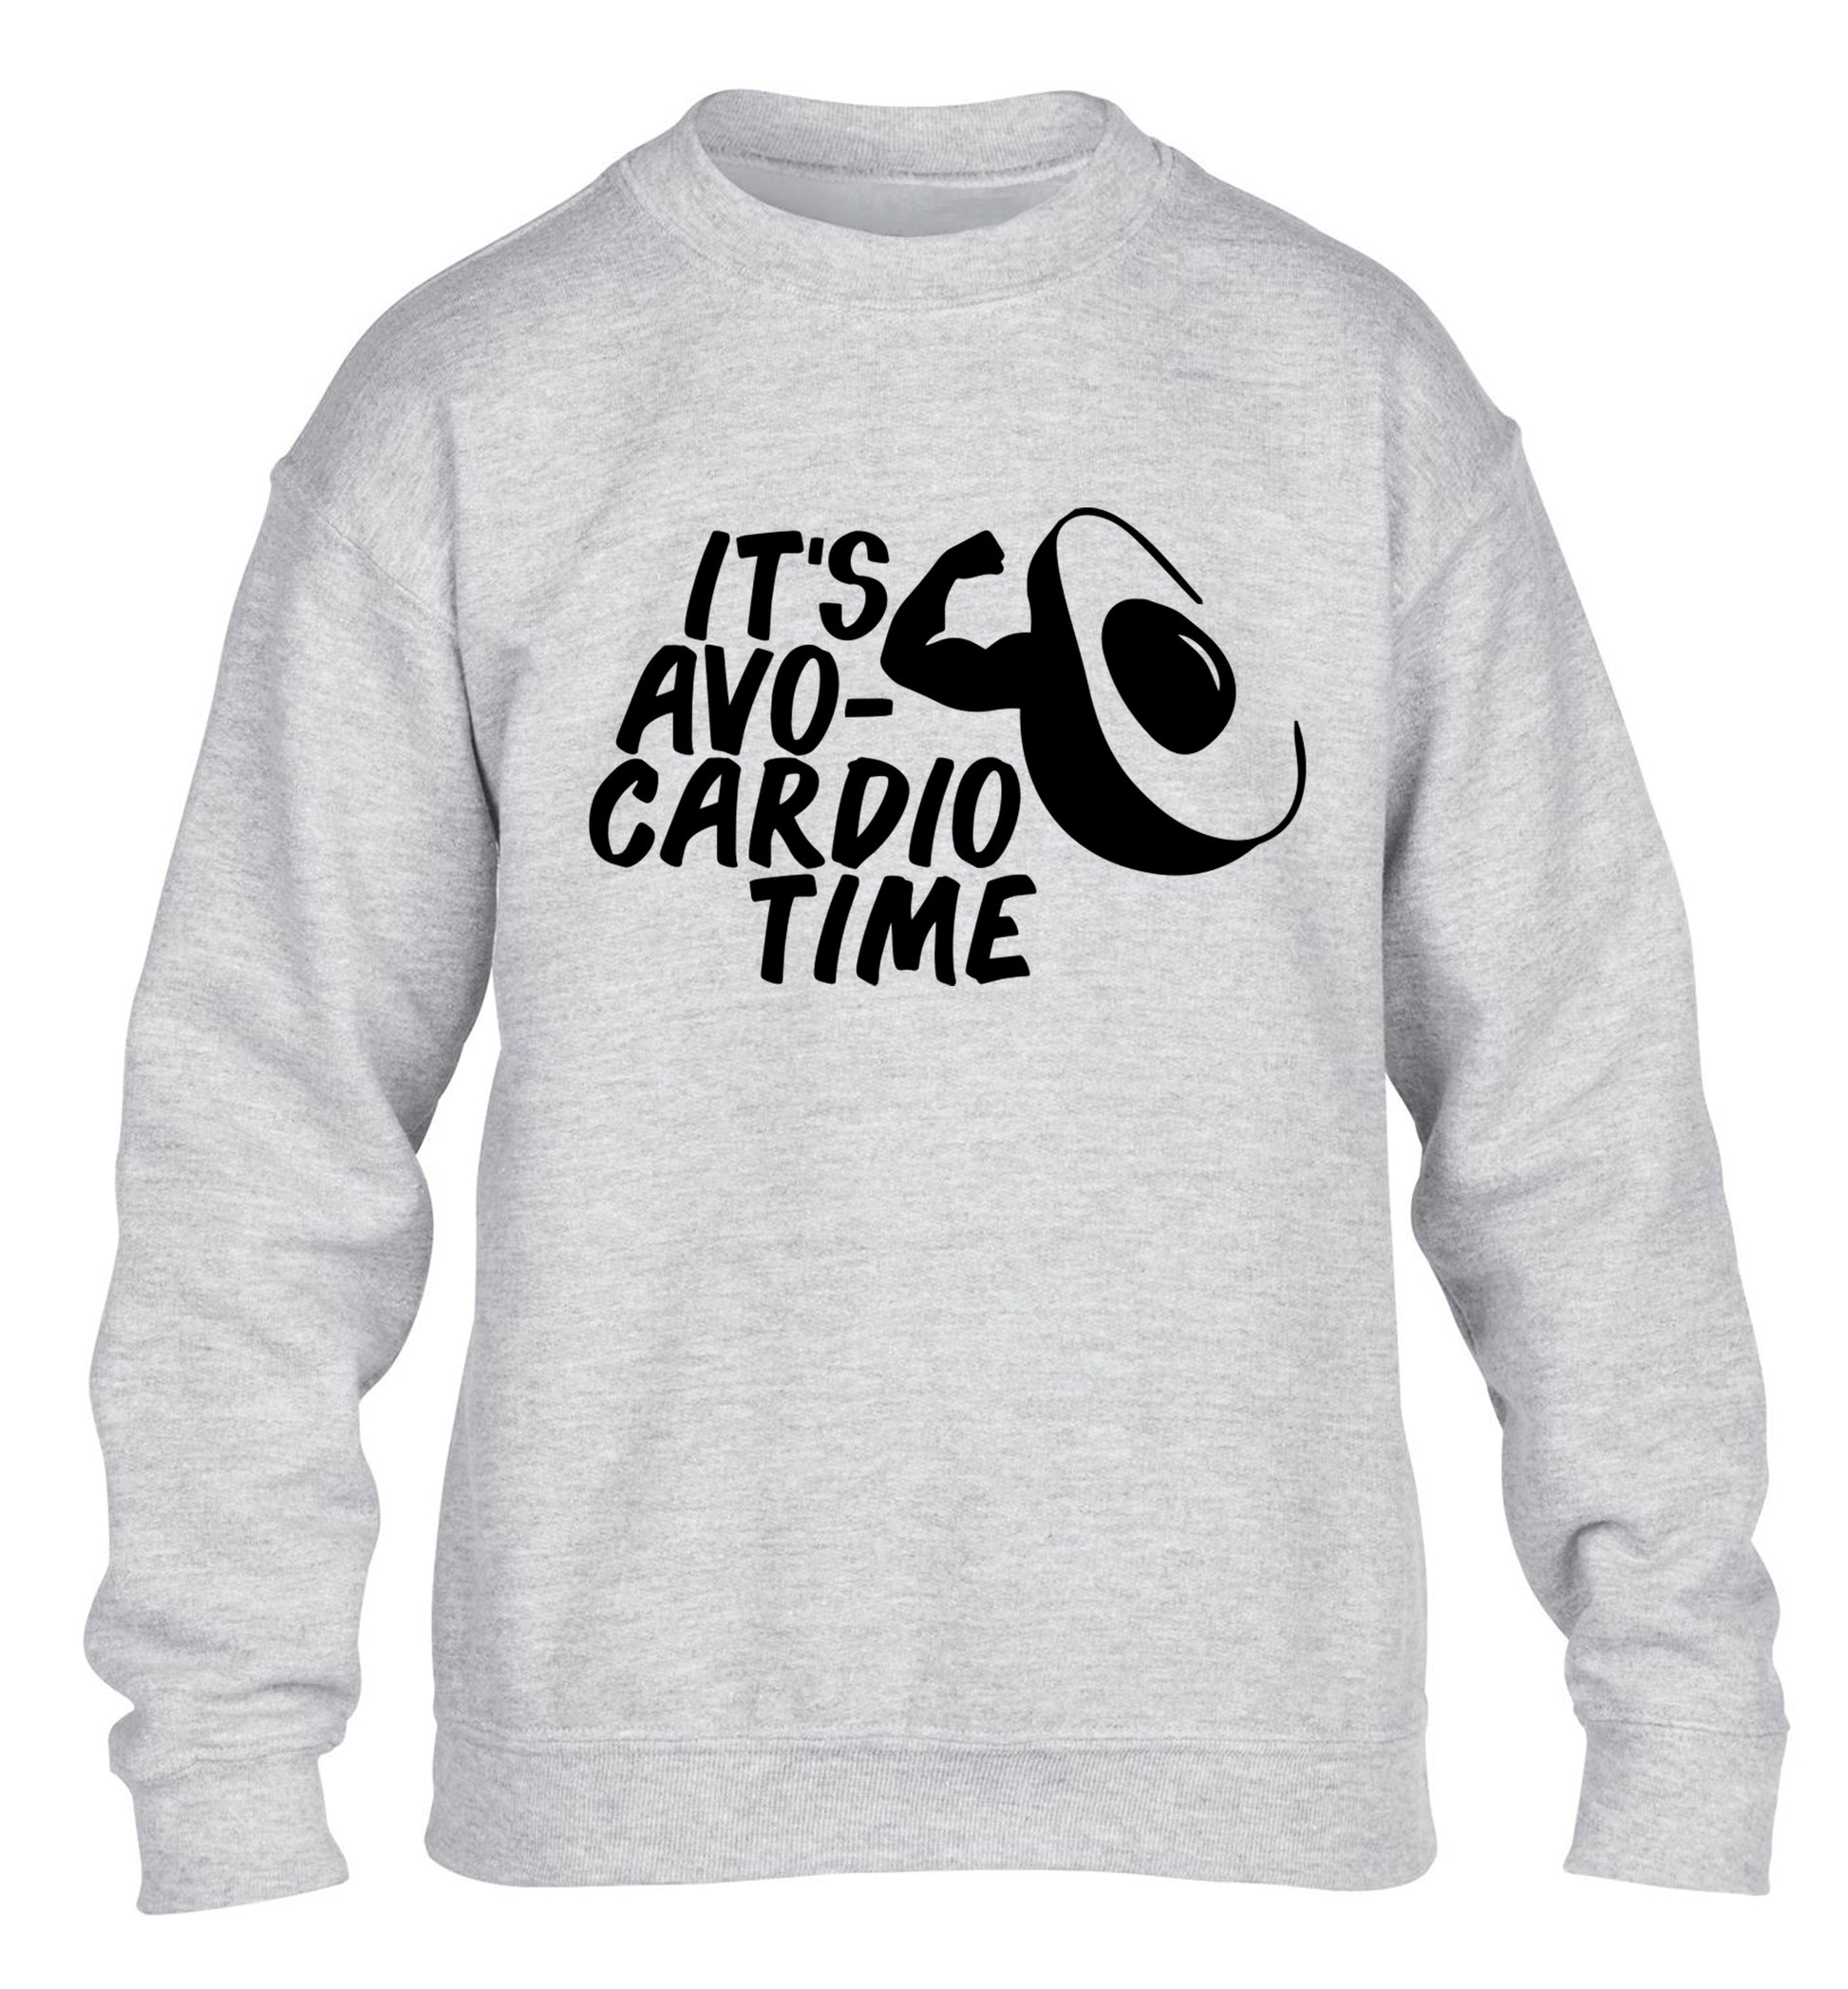 It's avo-cardio time children's grey sweater 12-14 Years